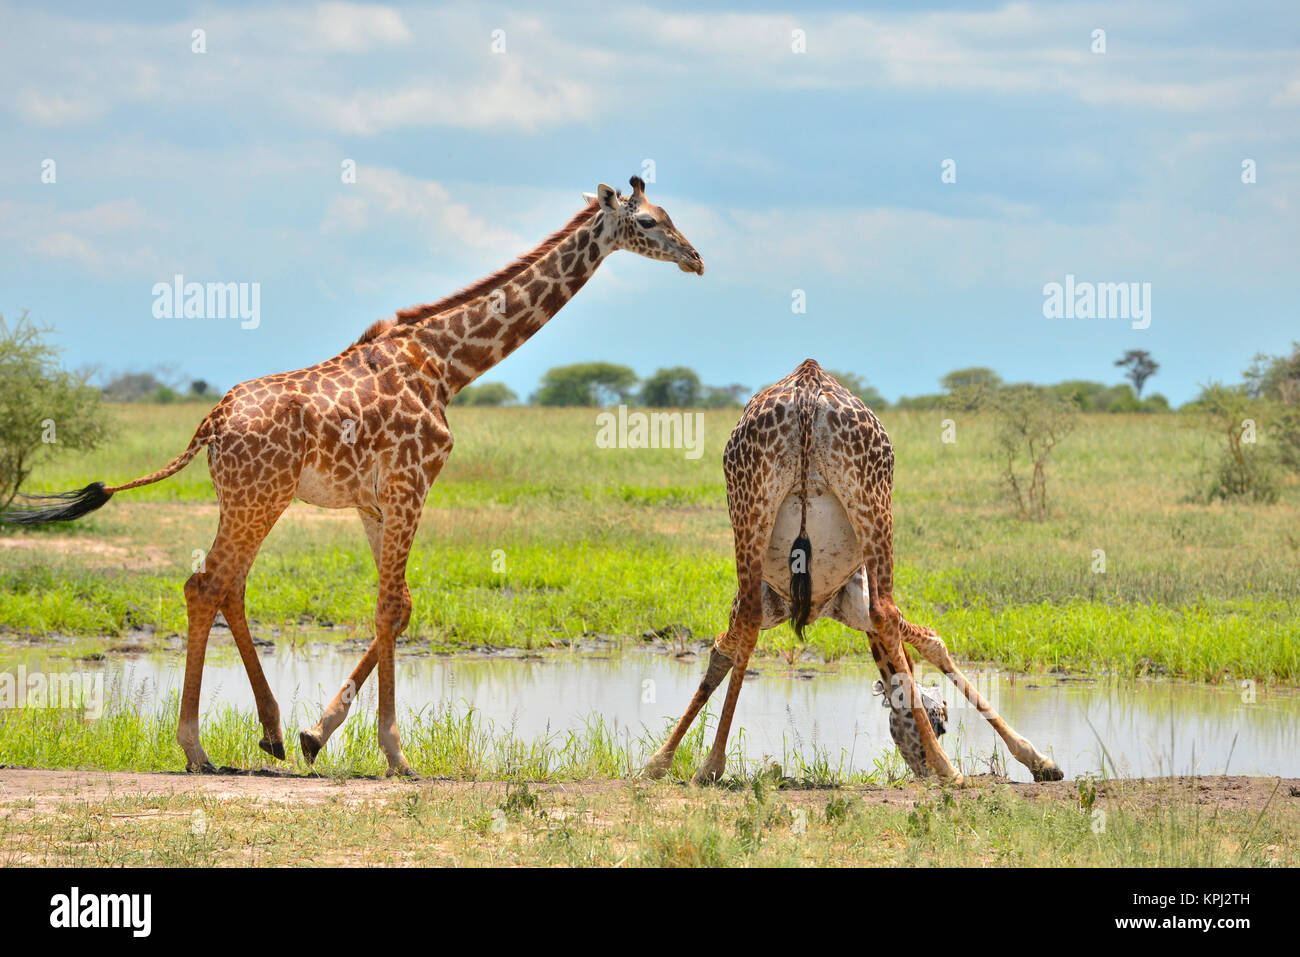 Tarangire national park in Tanzania is an undiscovered jewel with beautiful scenery along the Tarangire river. Giraffe drinking water at pan. Stock Photo